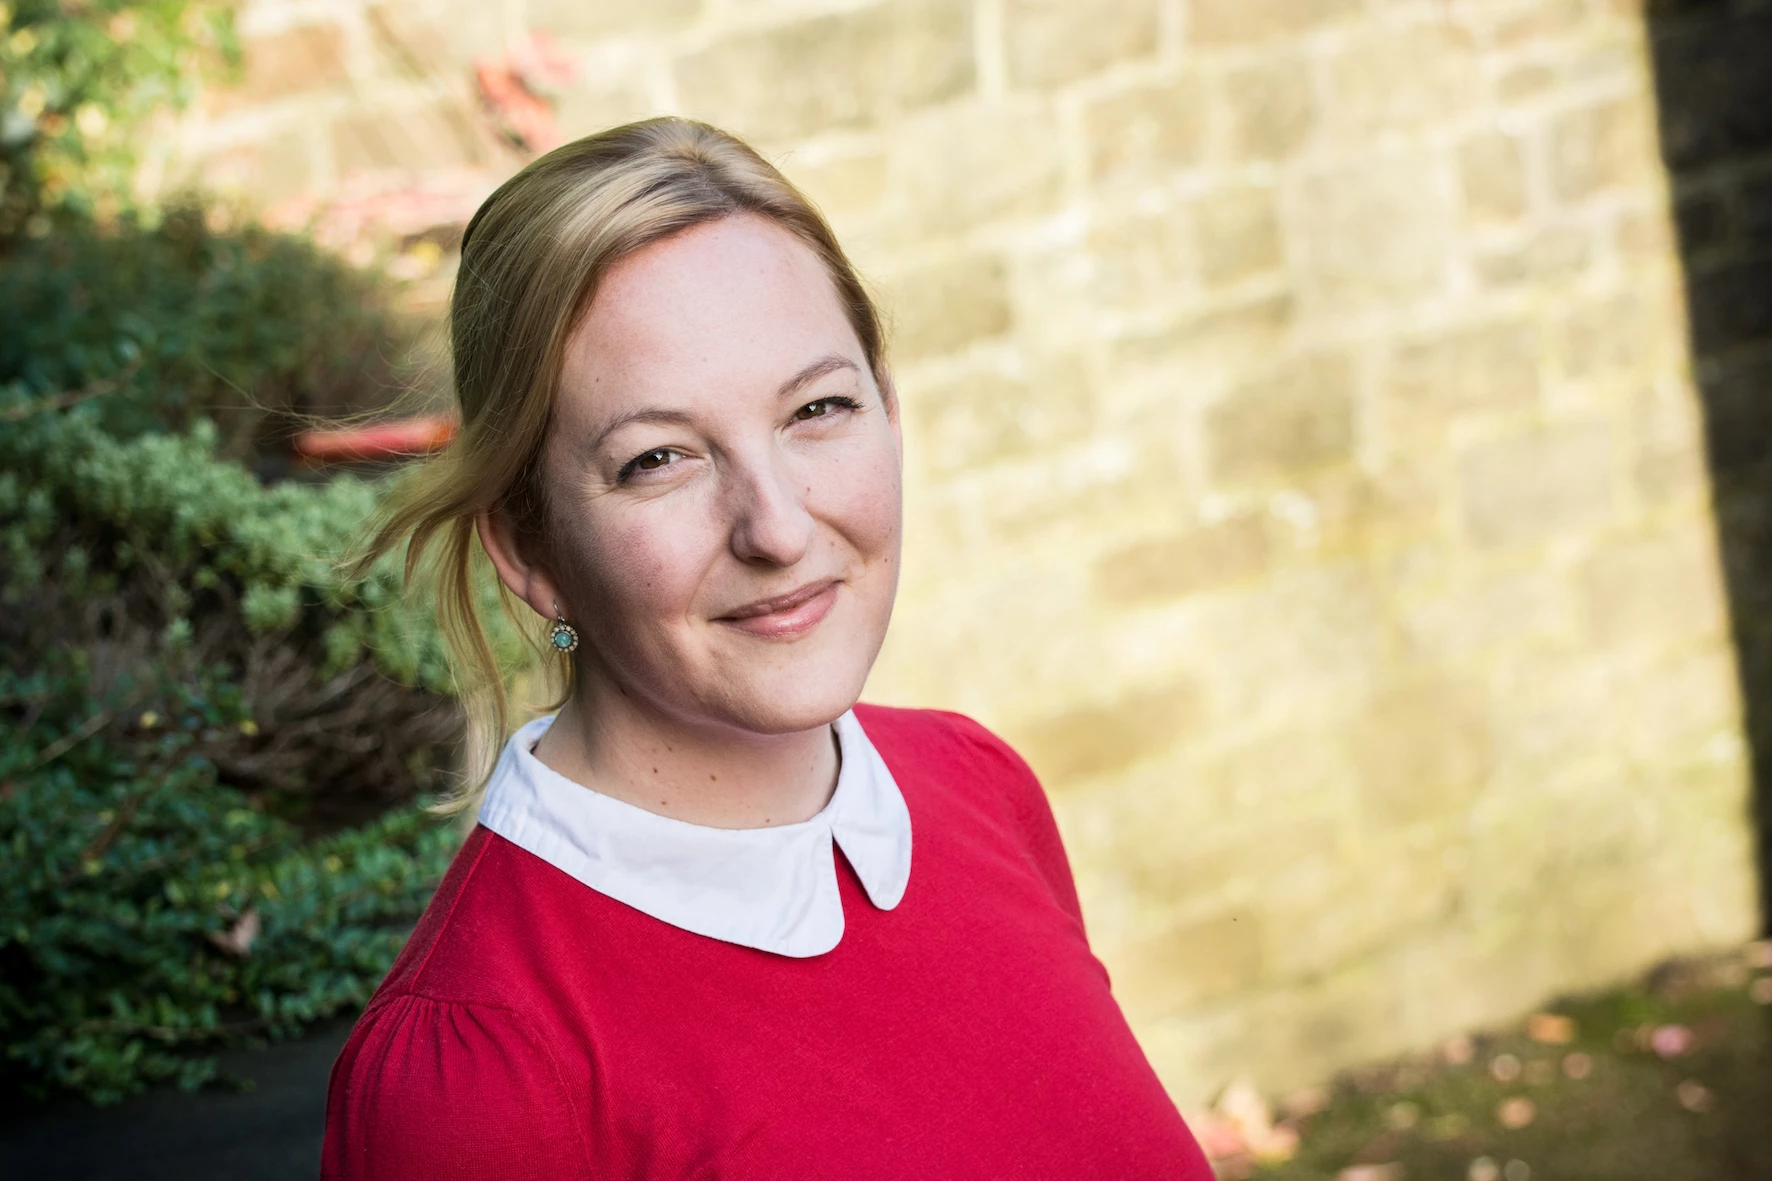 Joanna Young, new marketing strategist at Hotfoot Design, Lancaster